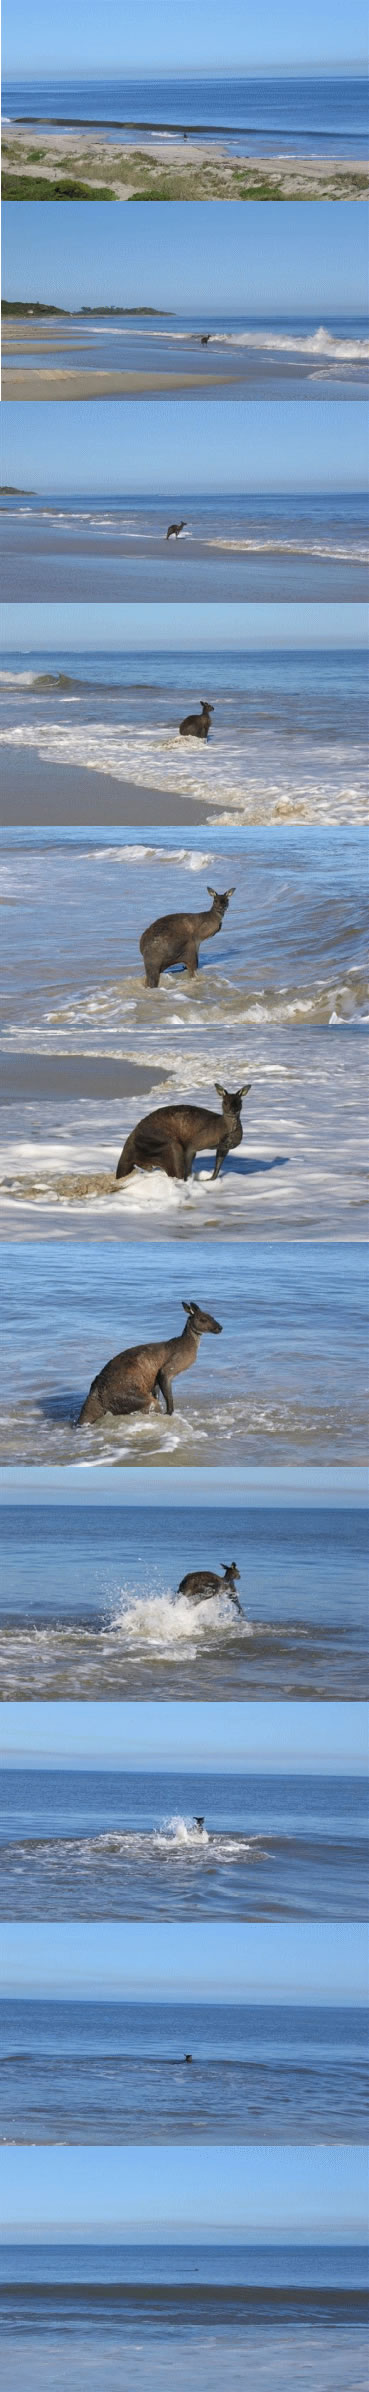 Obrázek kangaroo suicide